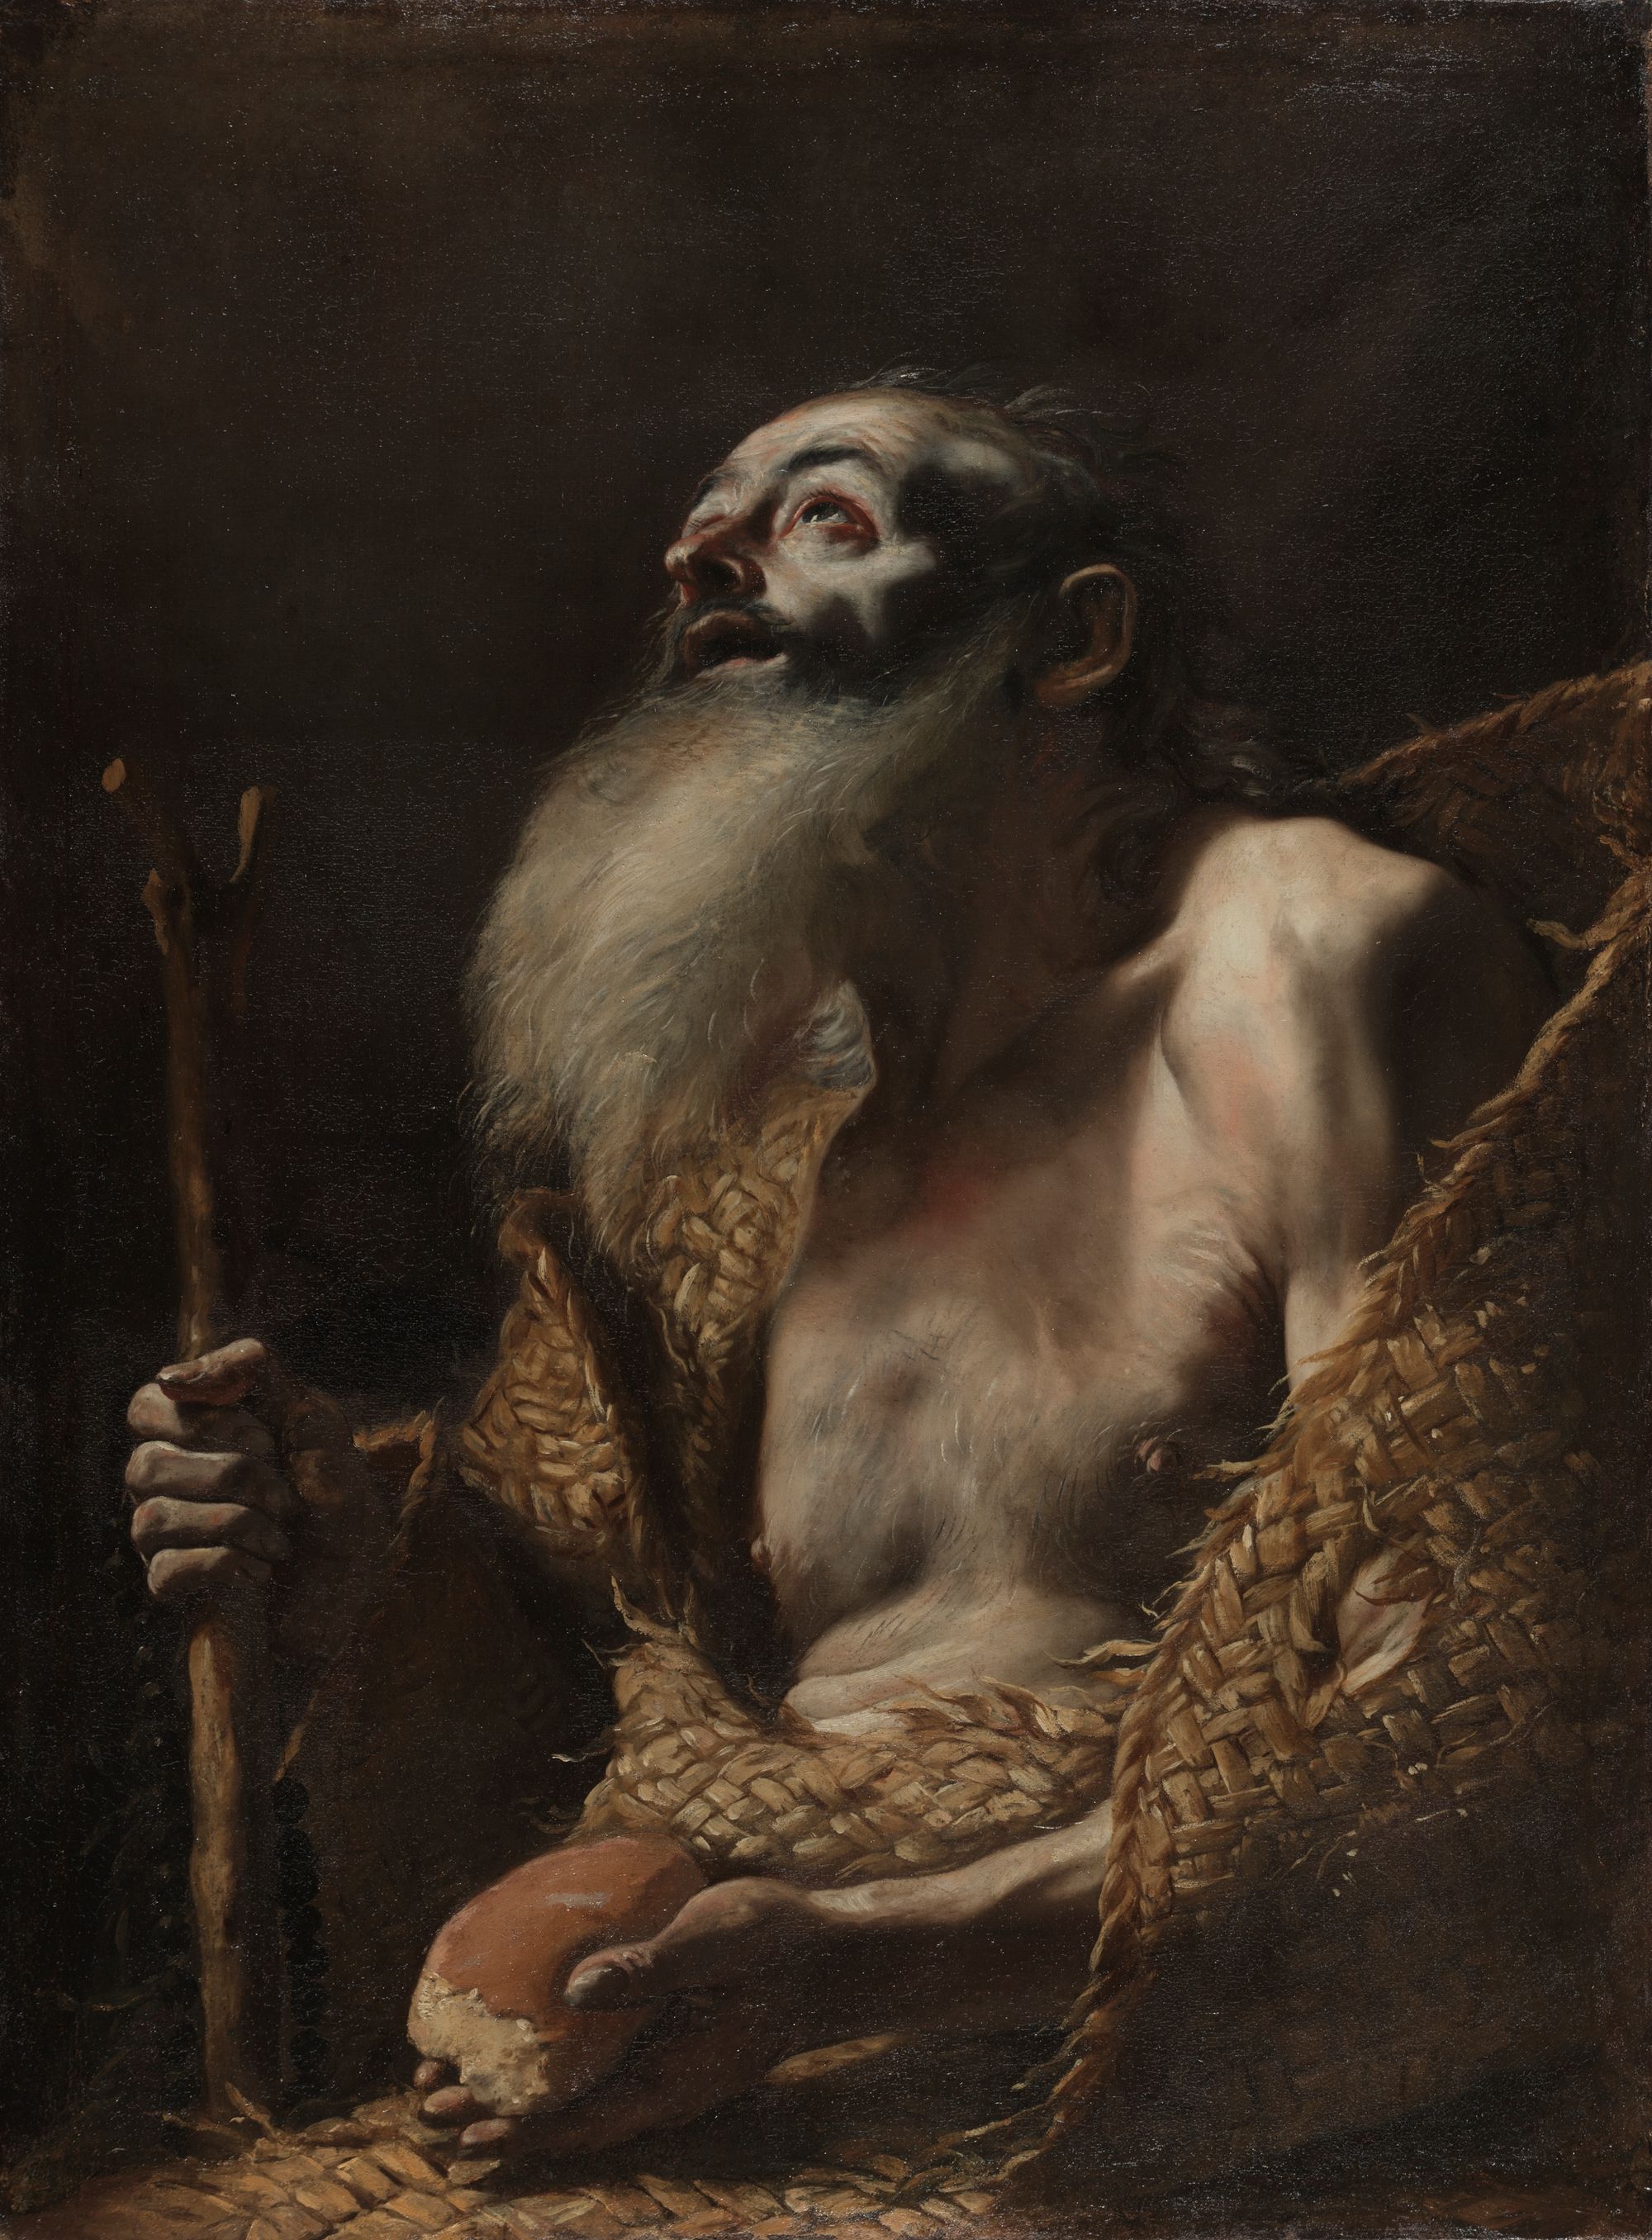 Saint Paul the Hermit by Mattia Preti (1662-1664) - Public Domain